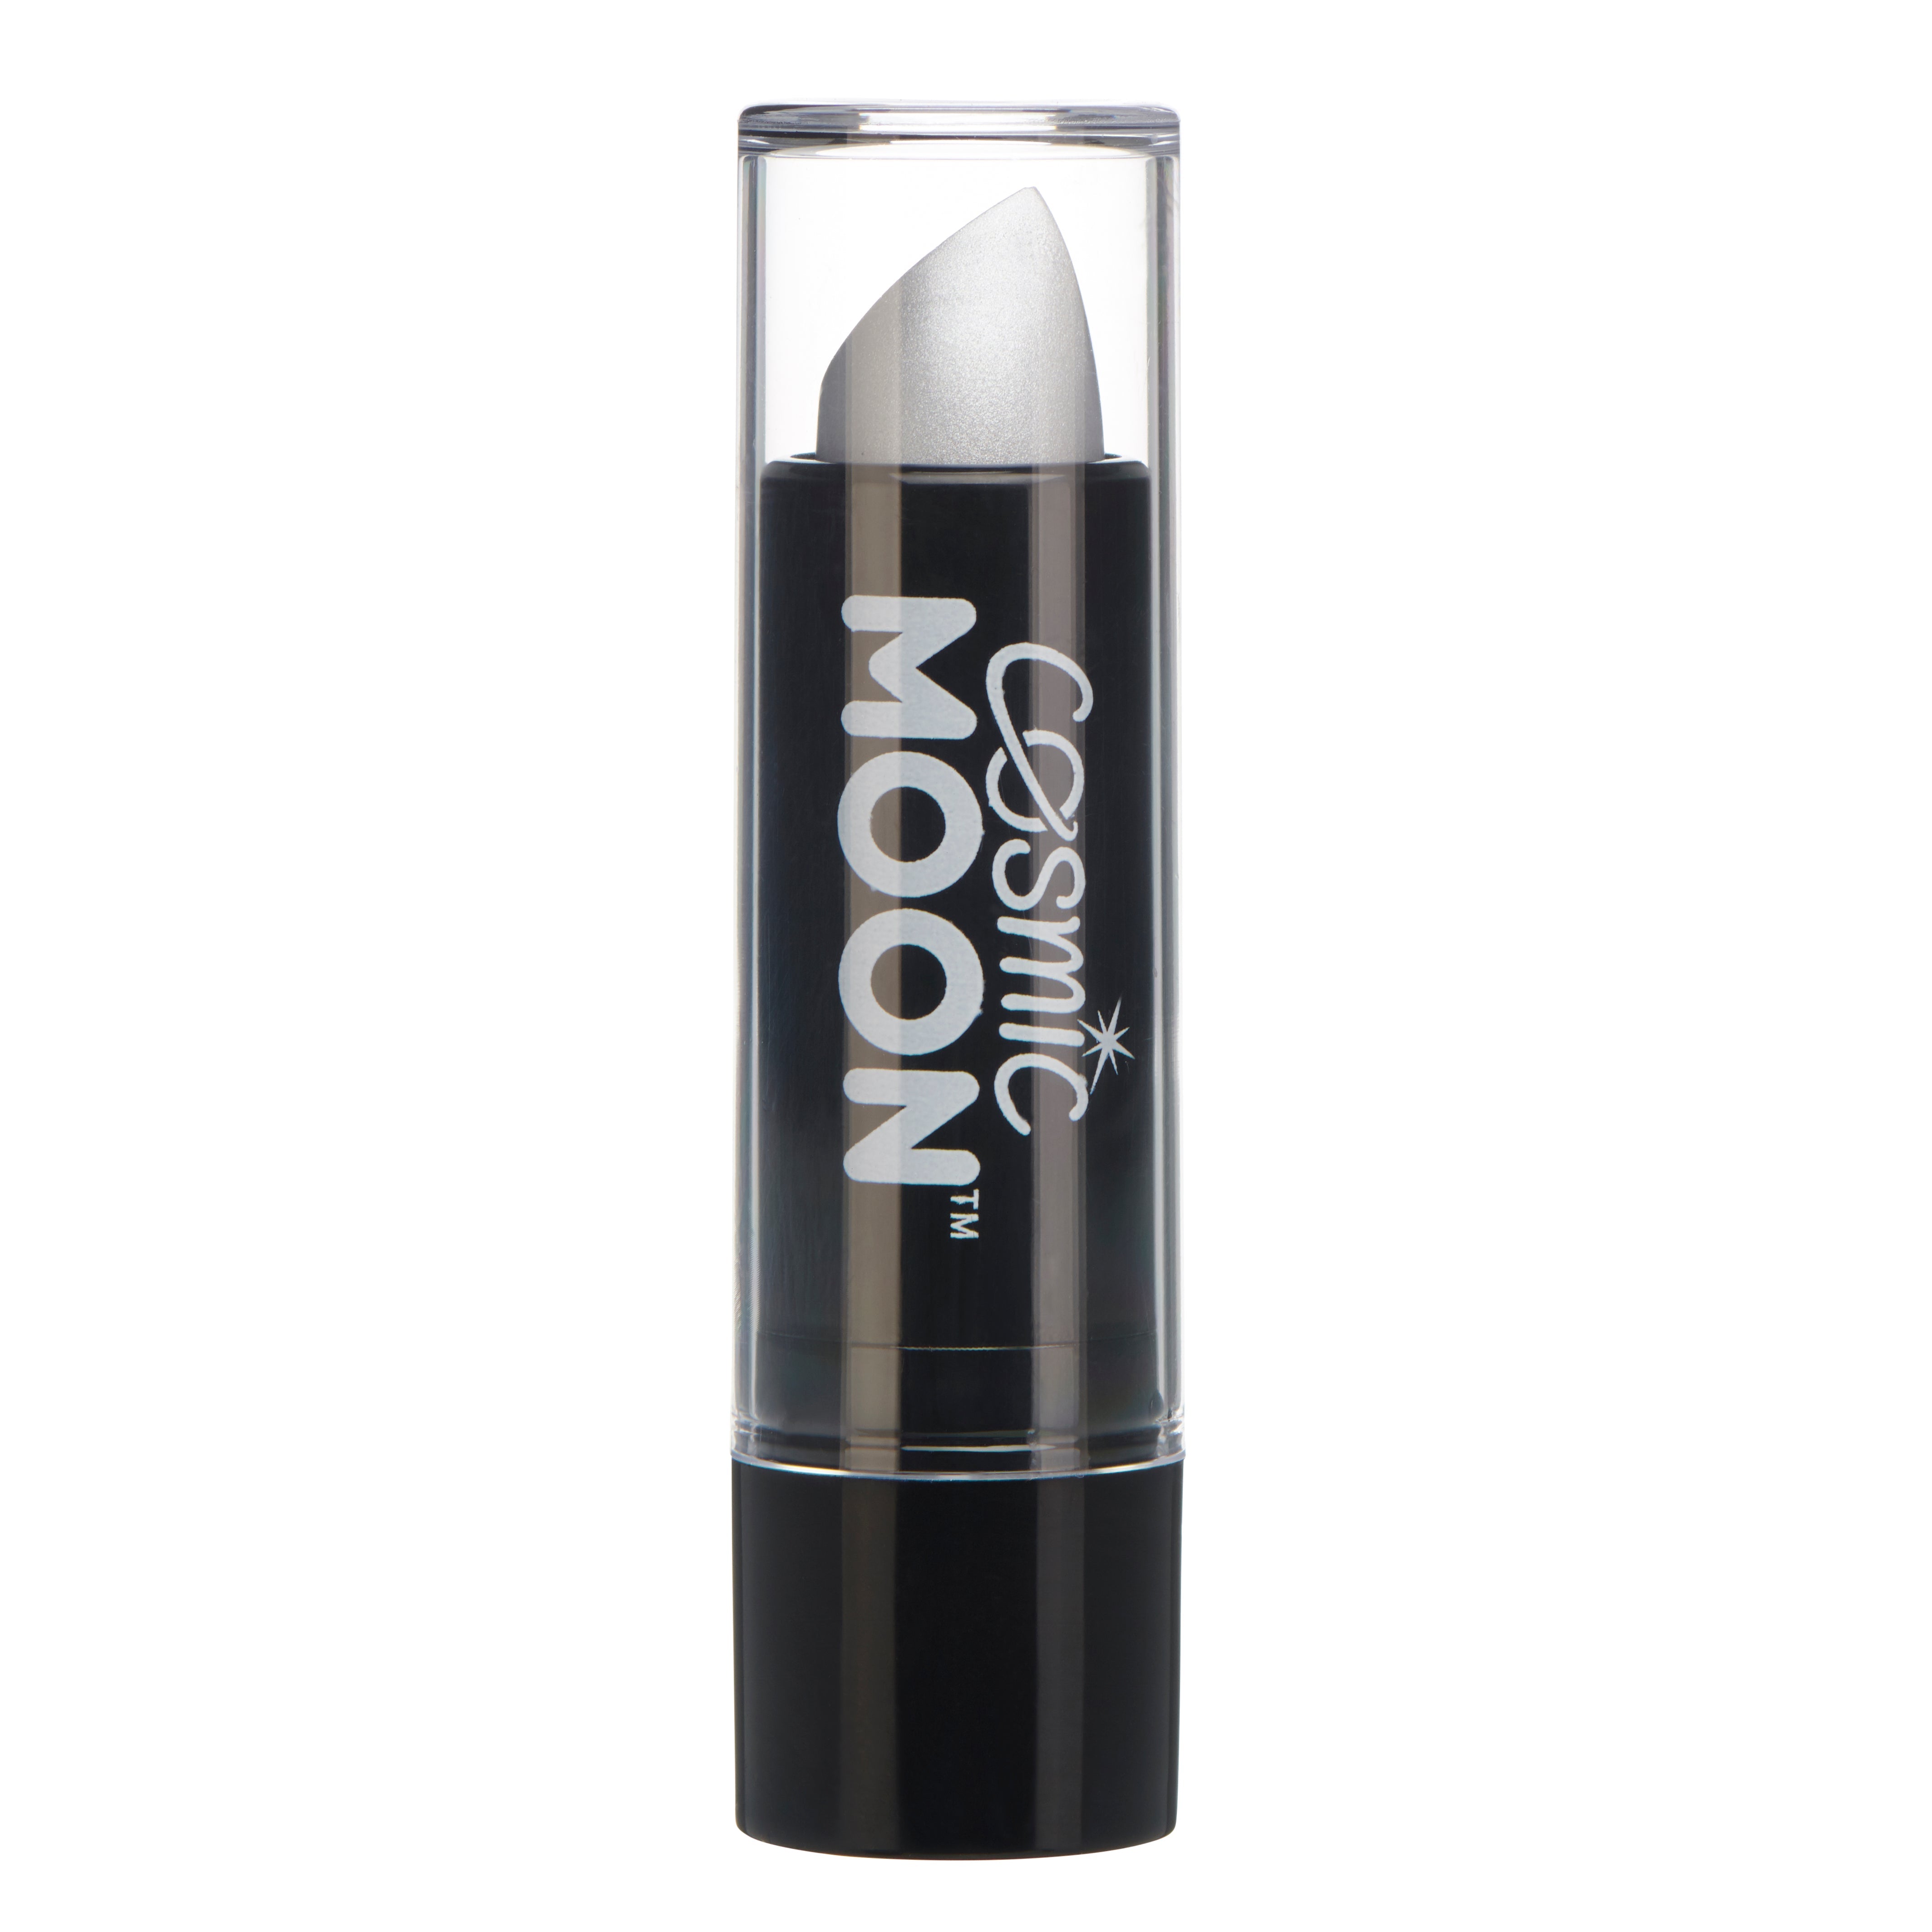 Silver - Metallic Lipstick, 5g. Cosmetically certified, FDA & Health Canada compliant and cruelty free.